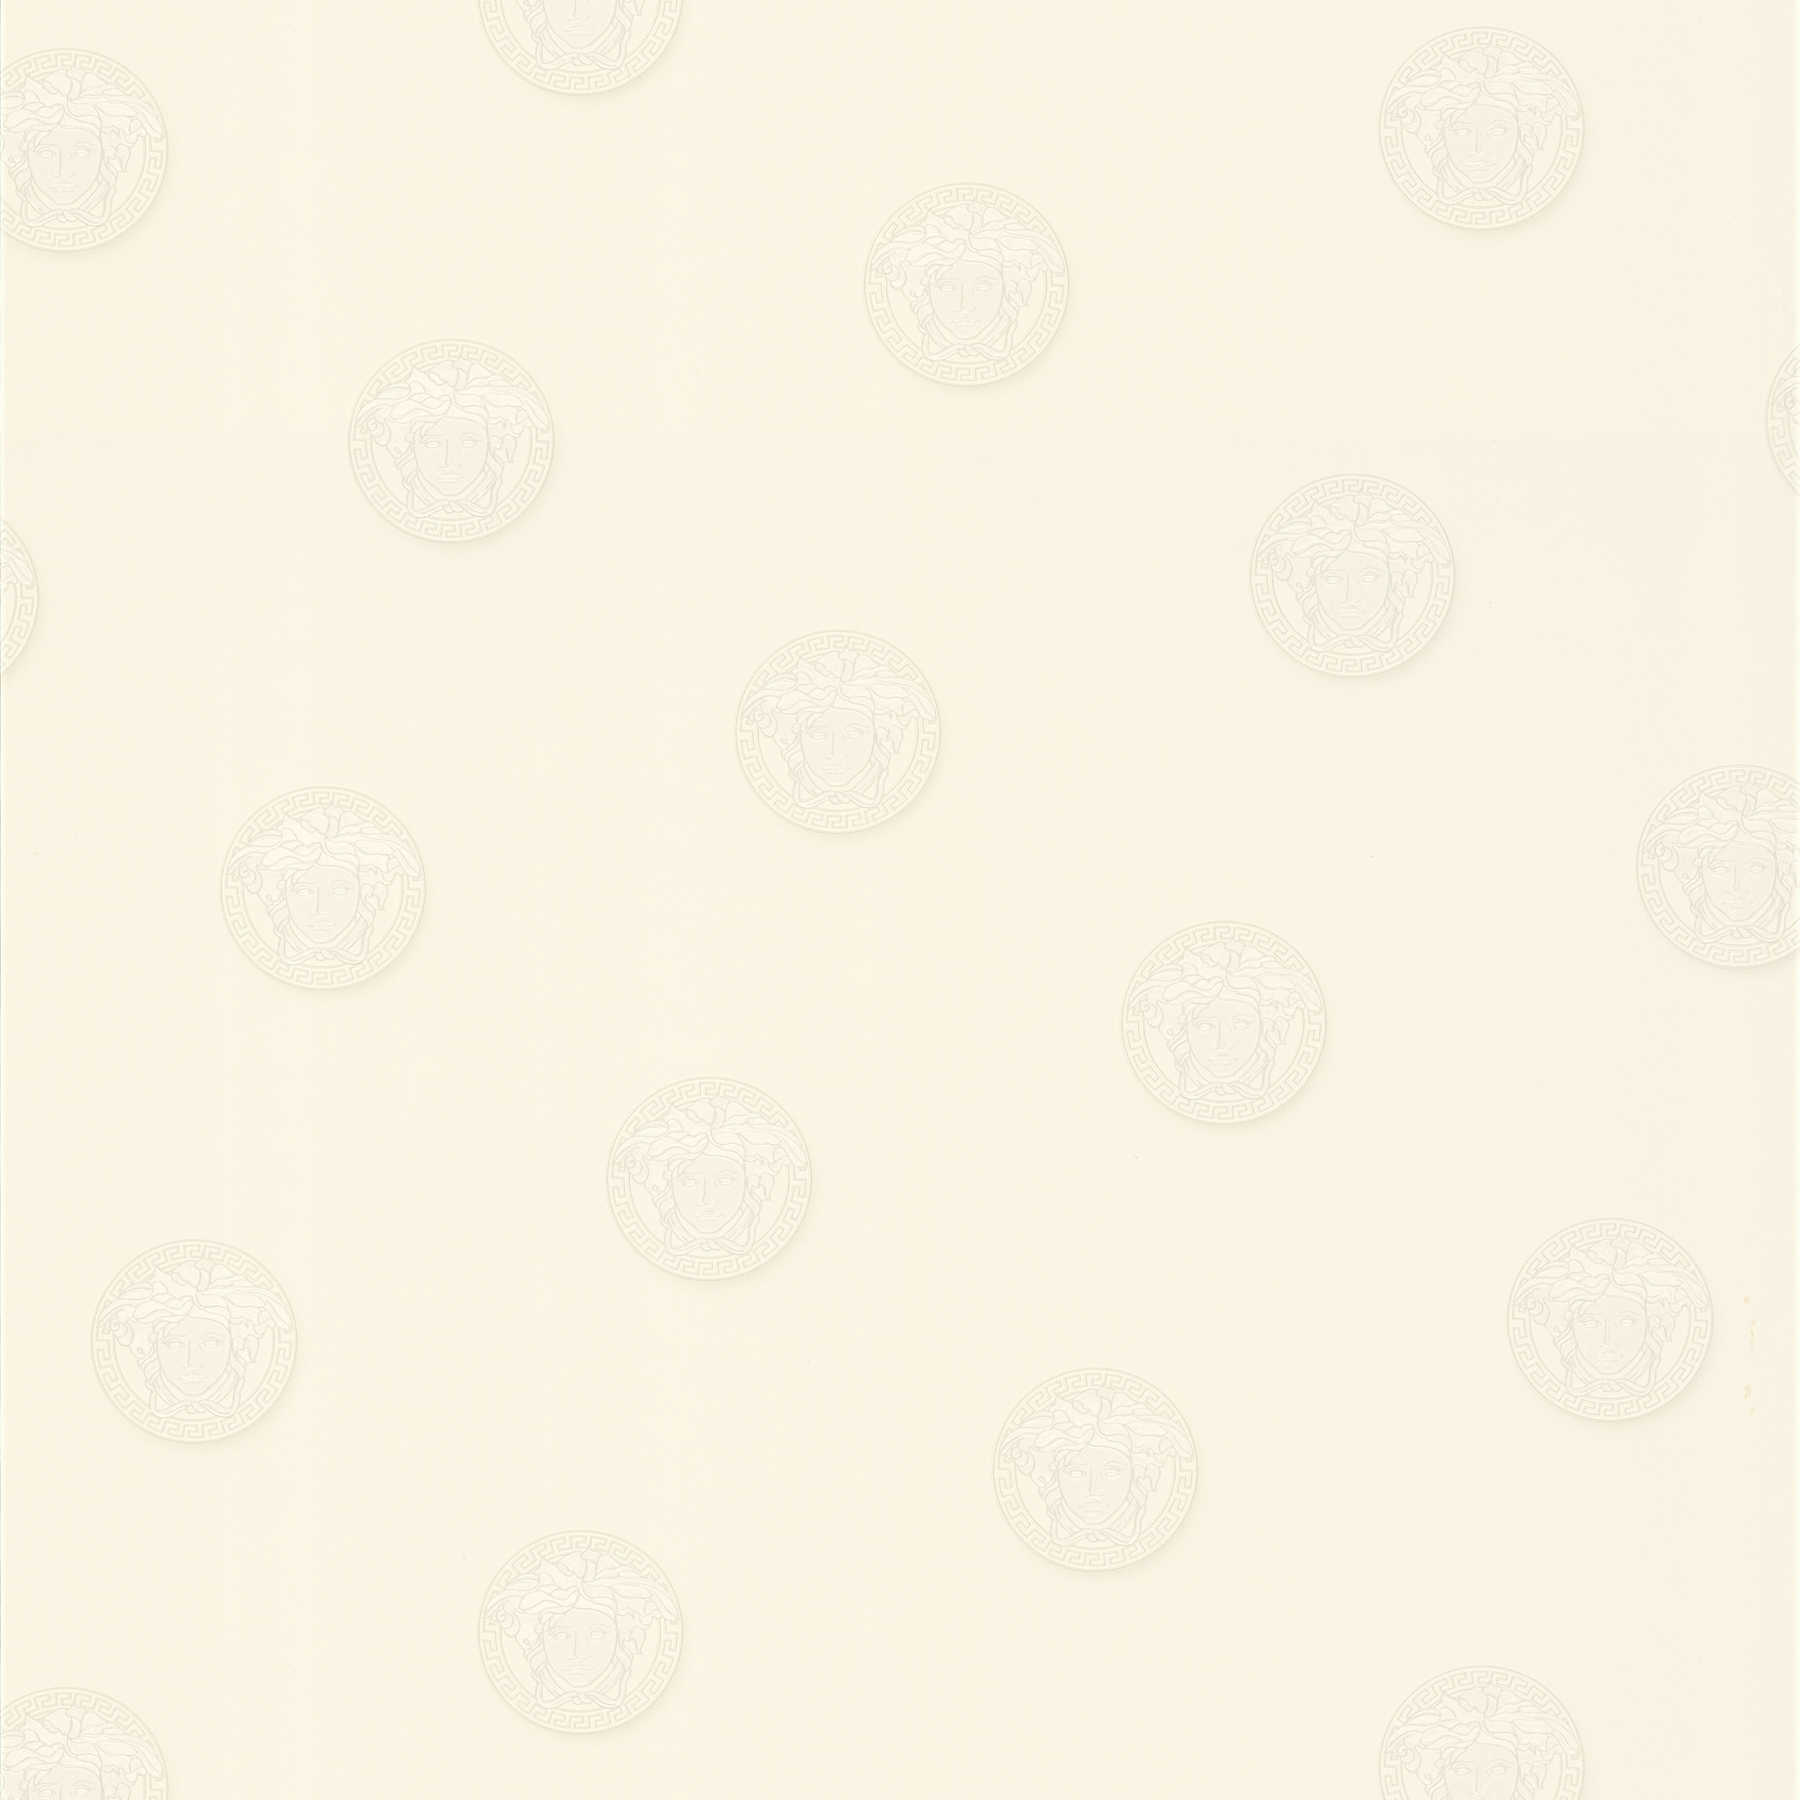 VERSACE wallpaper Medusa Emblem - grey, white
